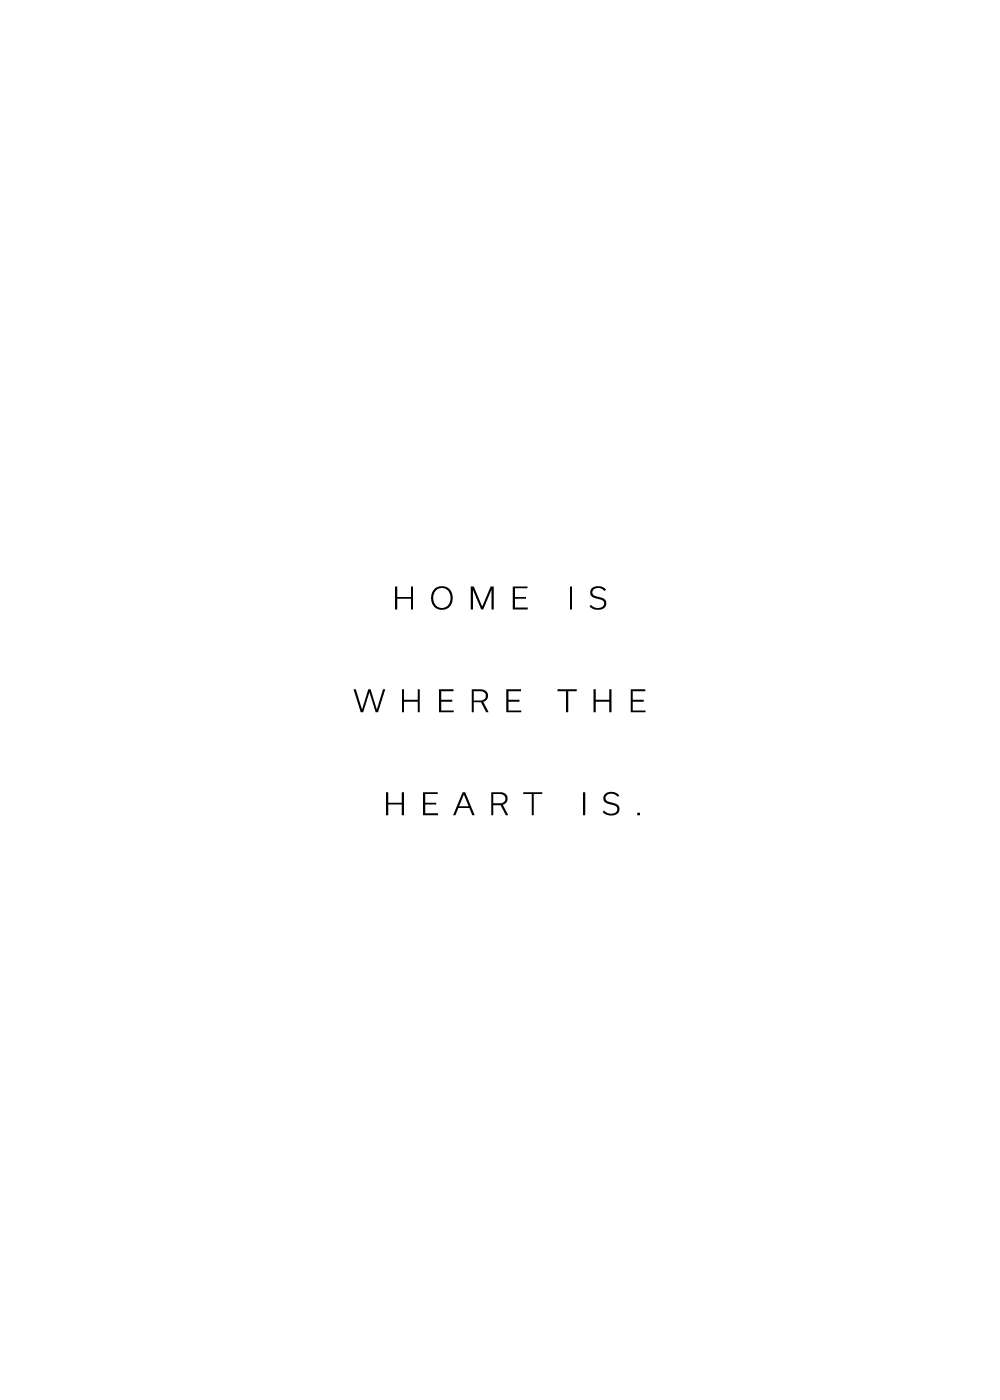 "Home is where the heart is" citatplakat